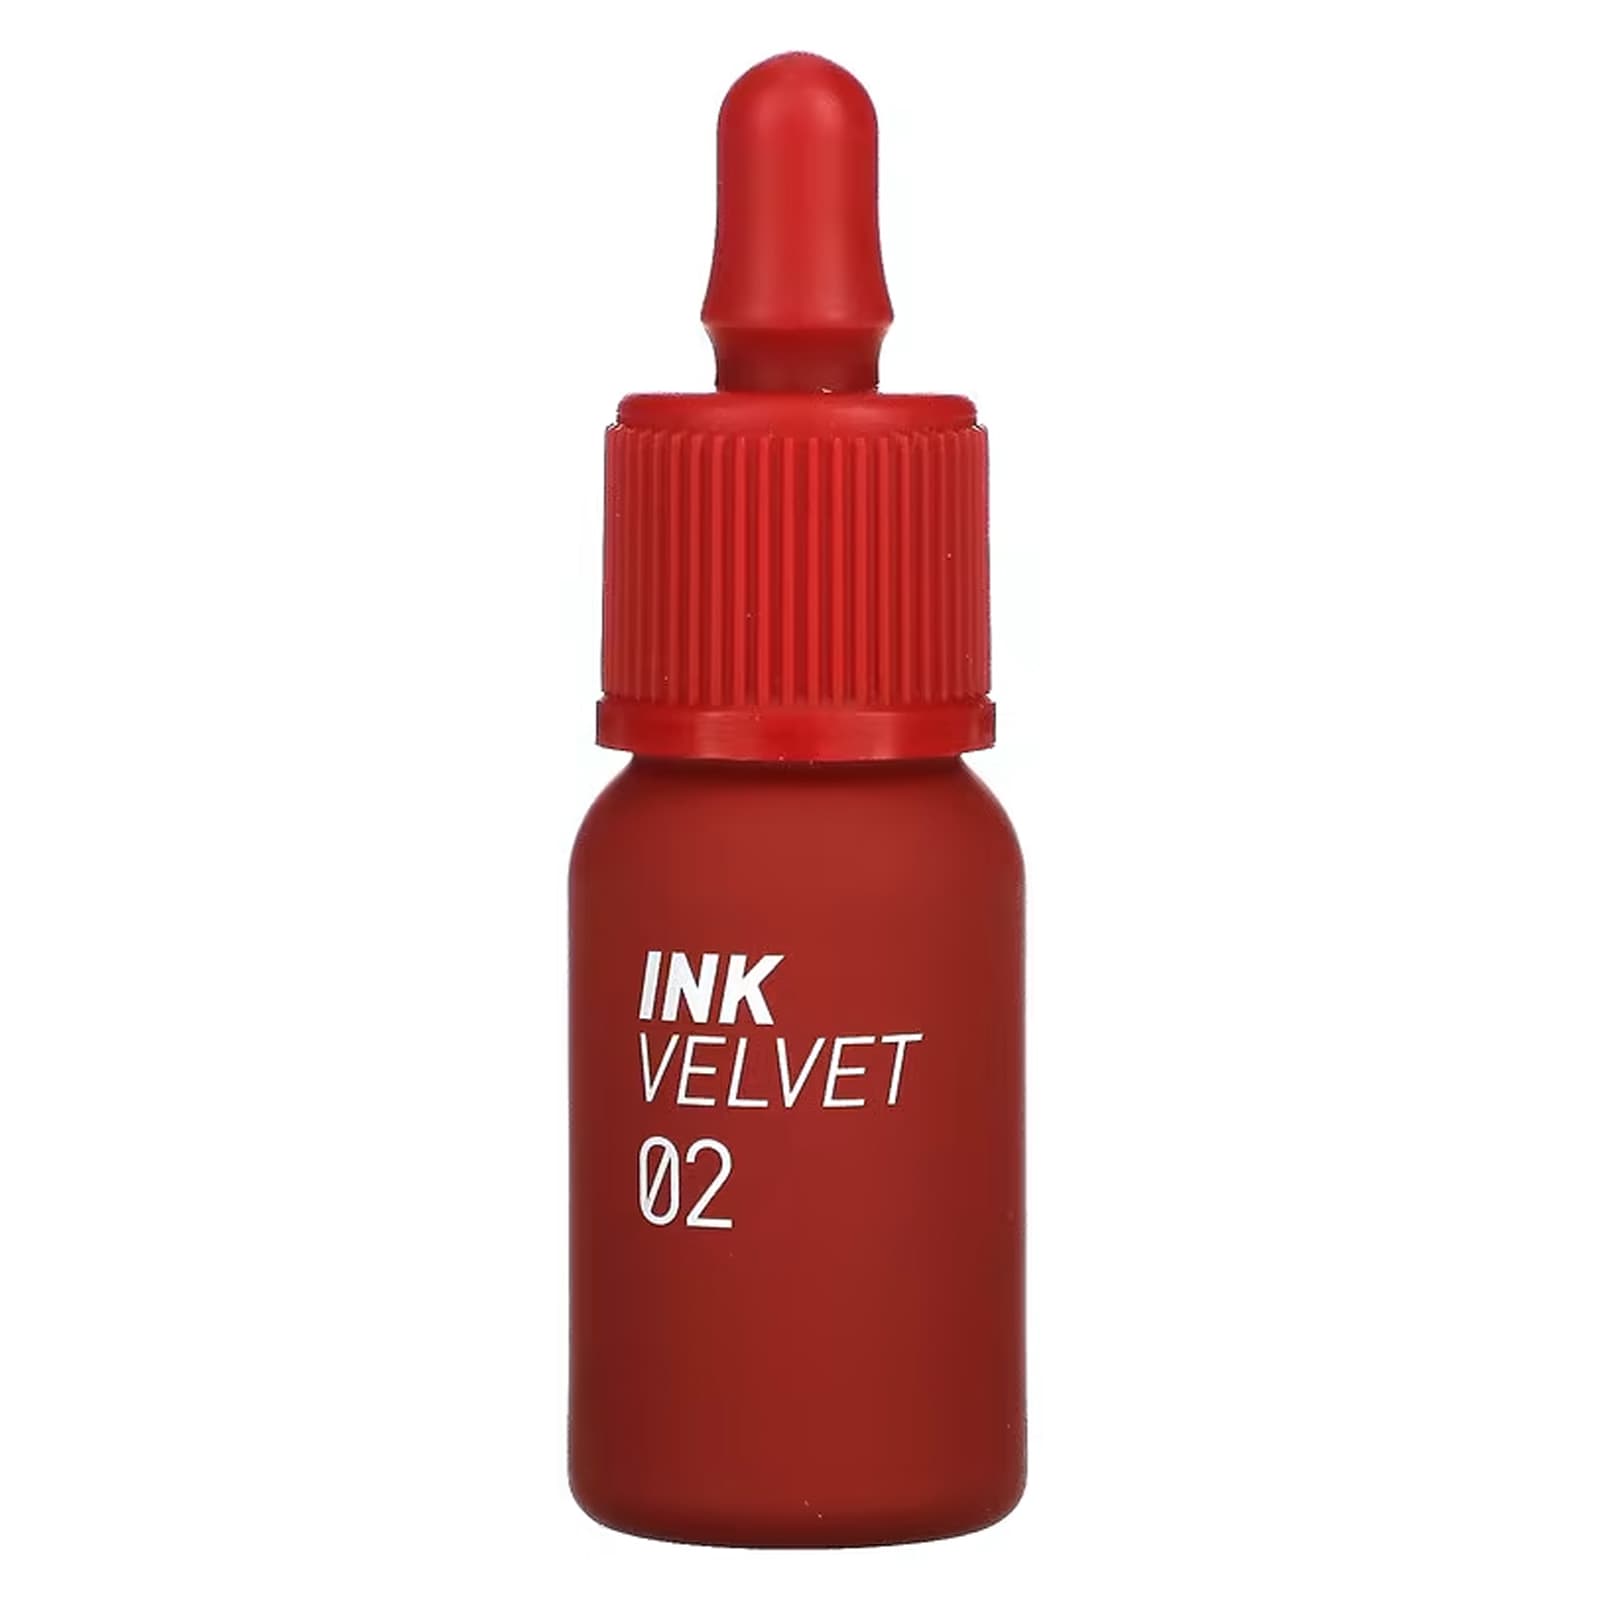 Тинт Peripera Ink Velvet для губ, 4 г peripera тинт для губ ink velvet 33 pure red 4 г 0 14 унции